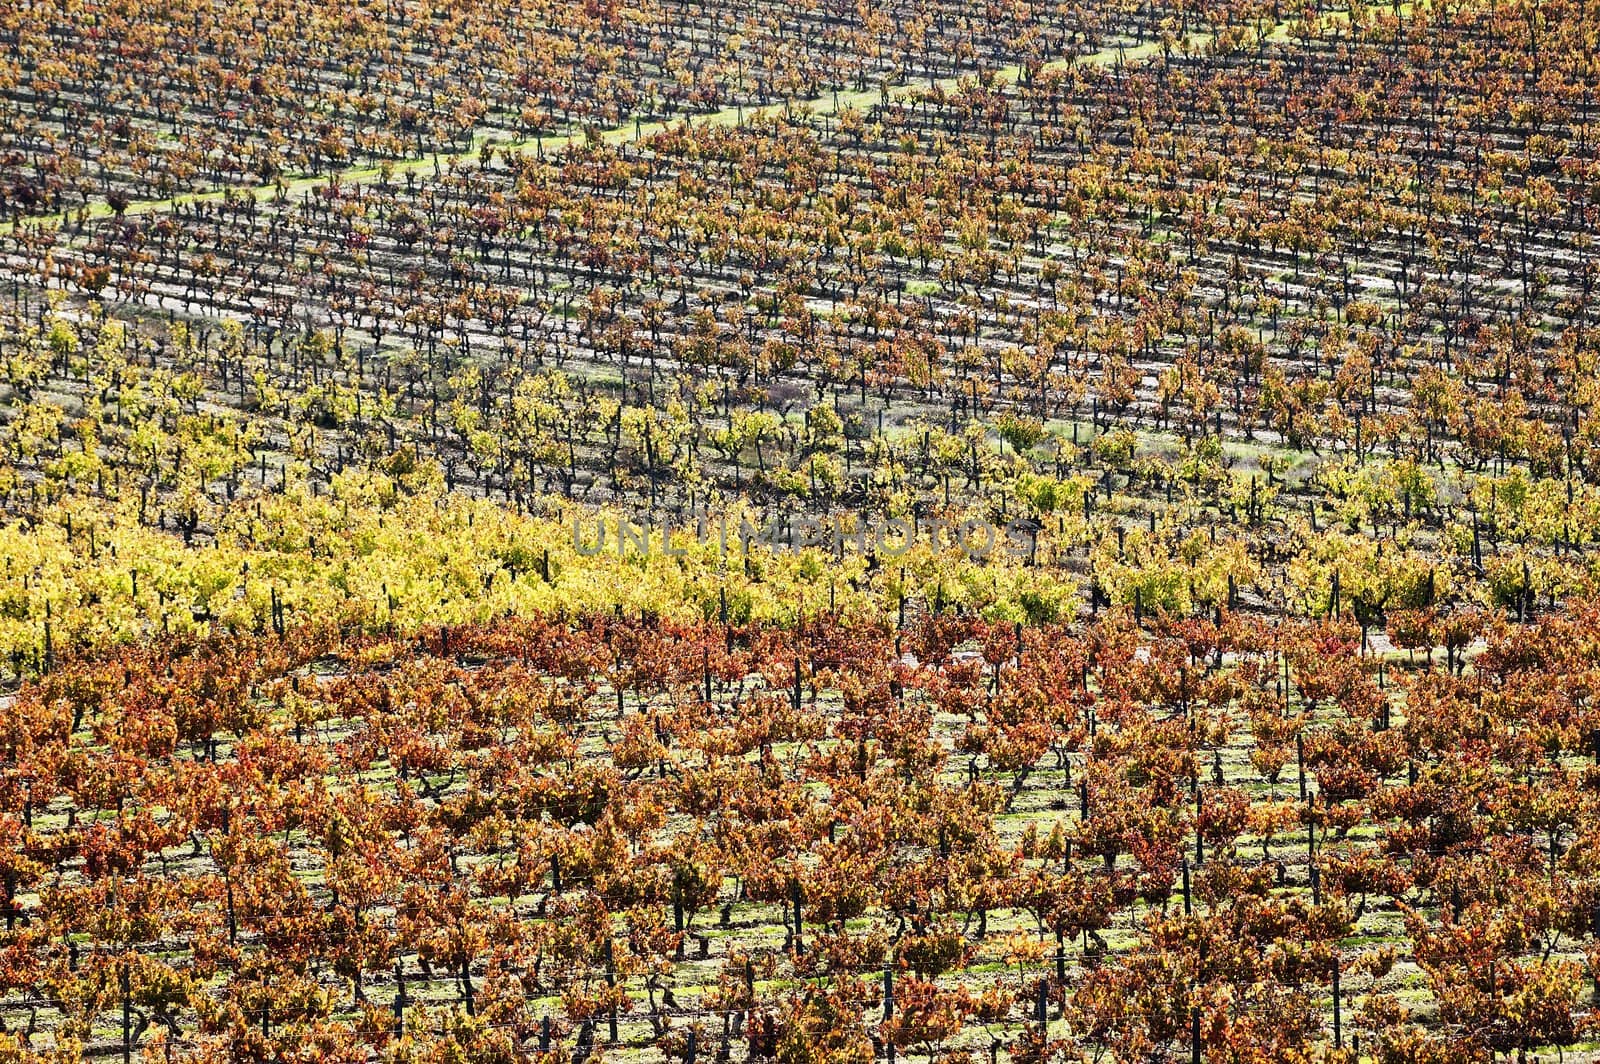 Colorful vineyards in the fall season,  Alentejo, Portugal